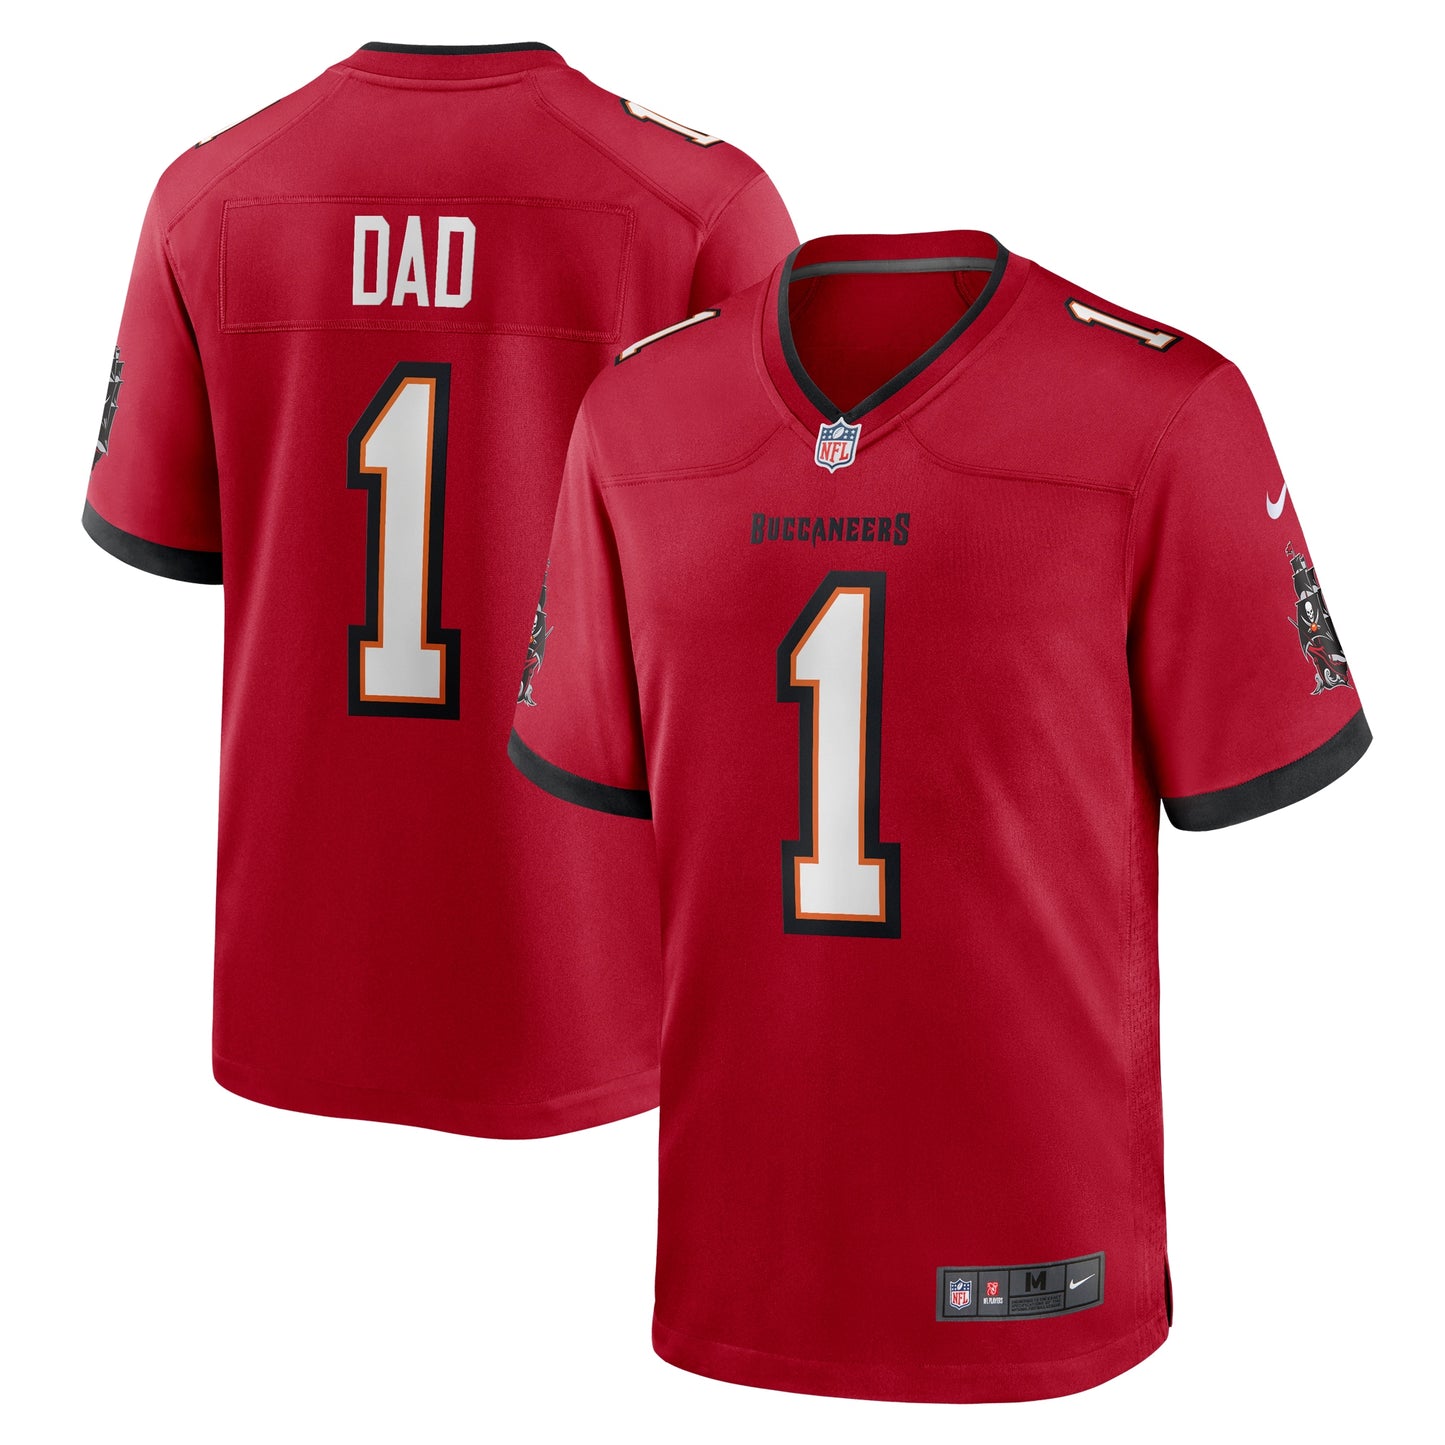 Number 1 Dad Tampa Bay Buccaneers Nike Game Jersey - Red